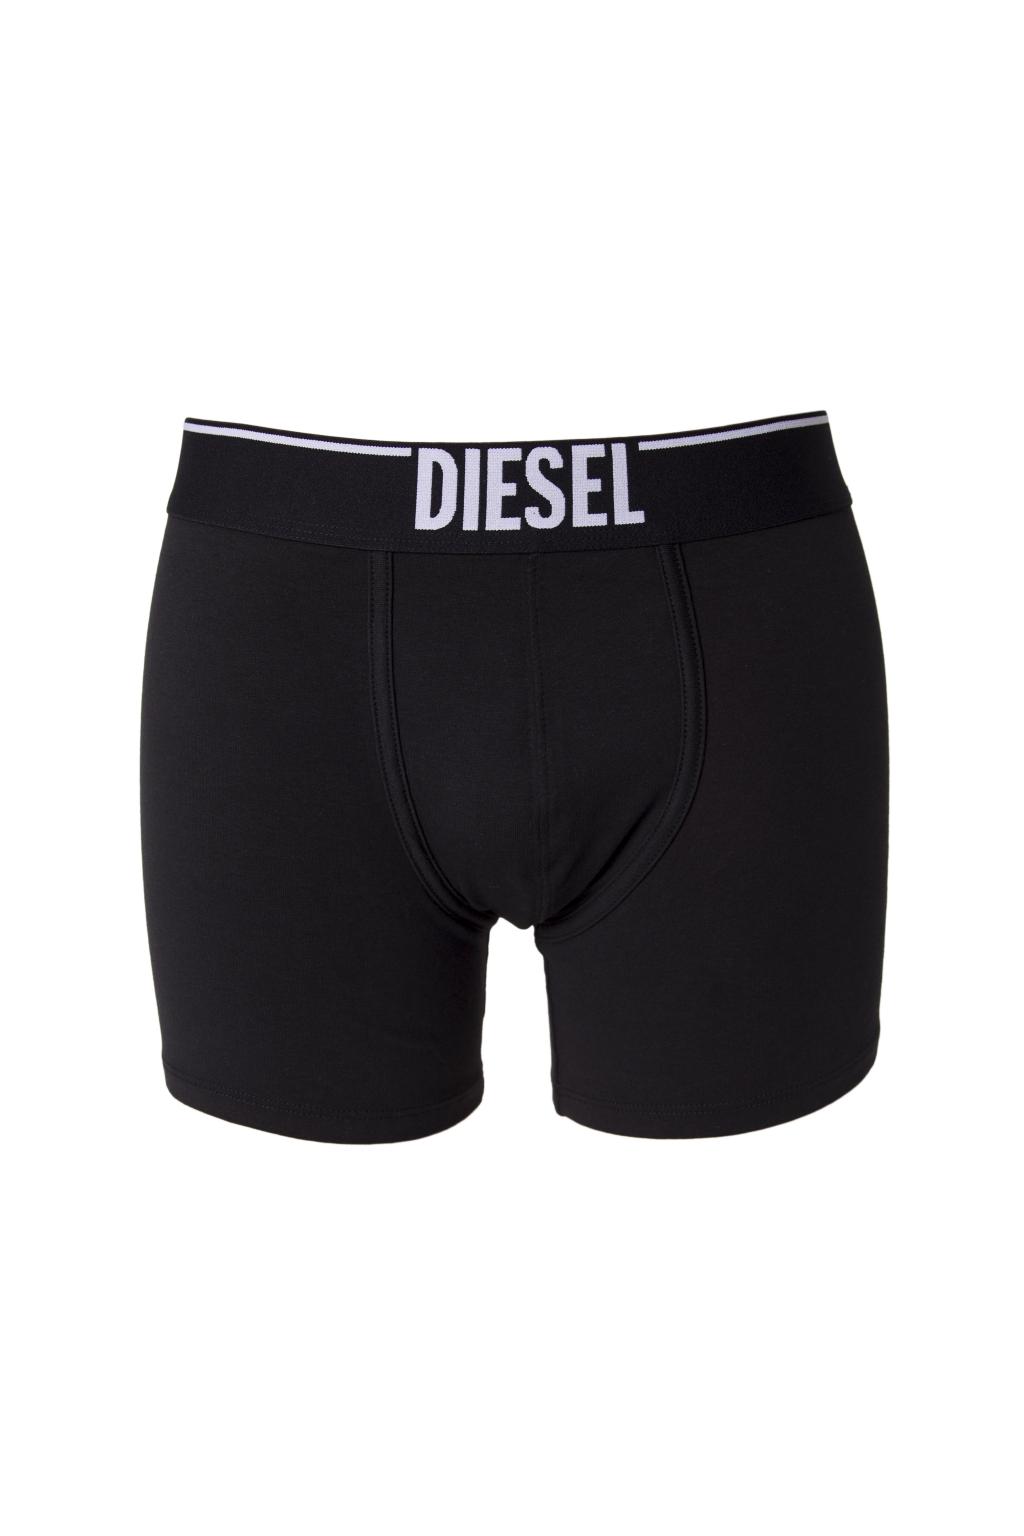 Diesel Boxer Two-Pack | Men's Clothing | Vitkac